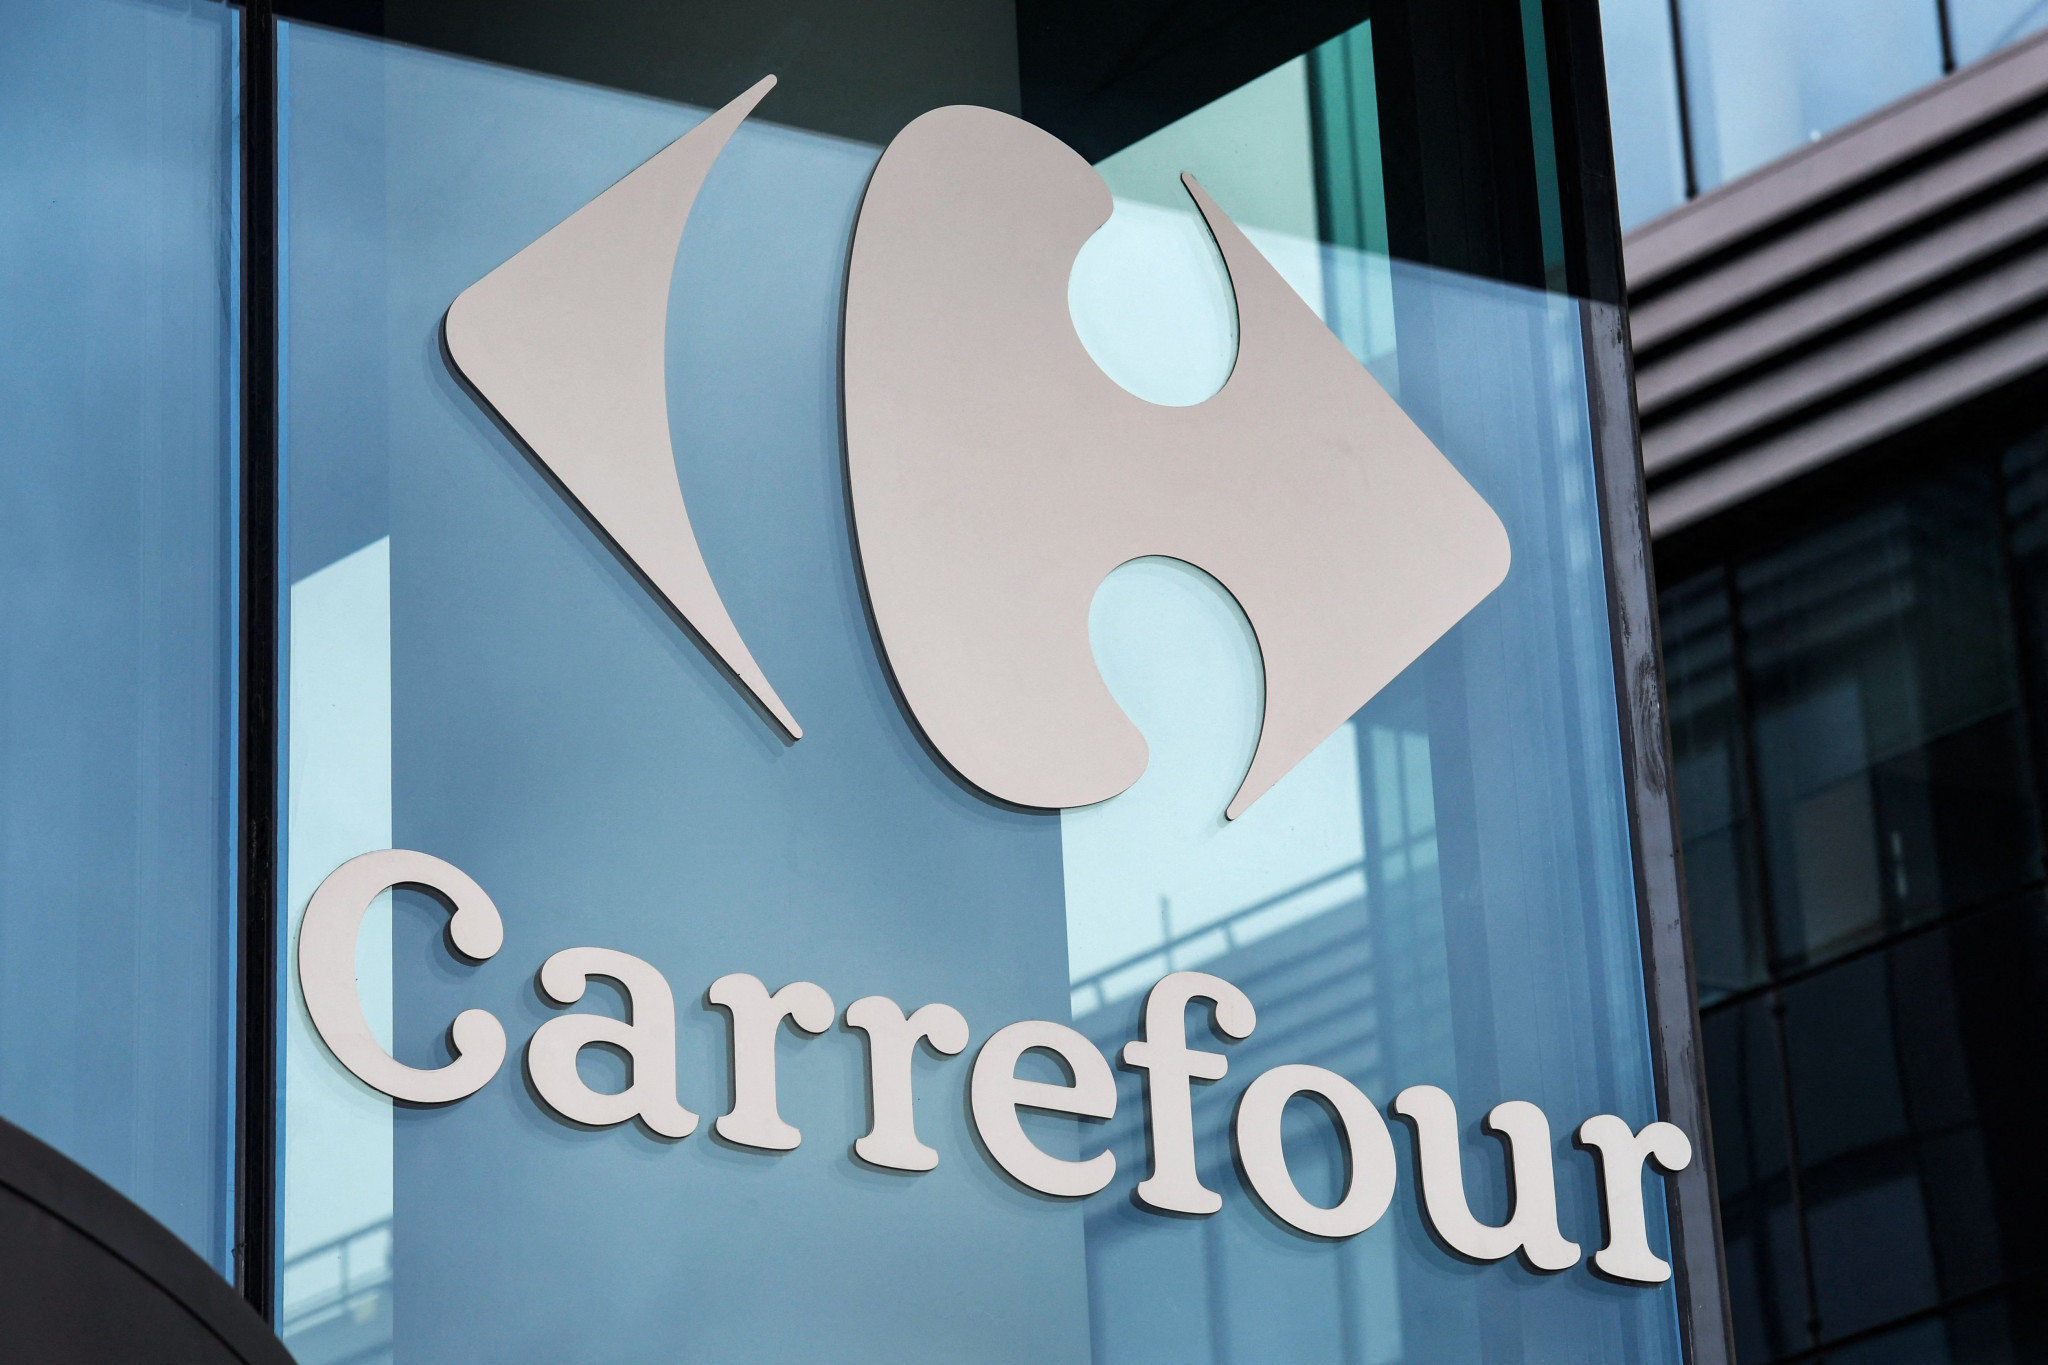 Carrefour named premium partner for Paris 2024 Olympics and Paralympics